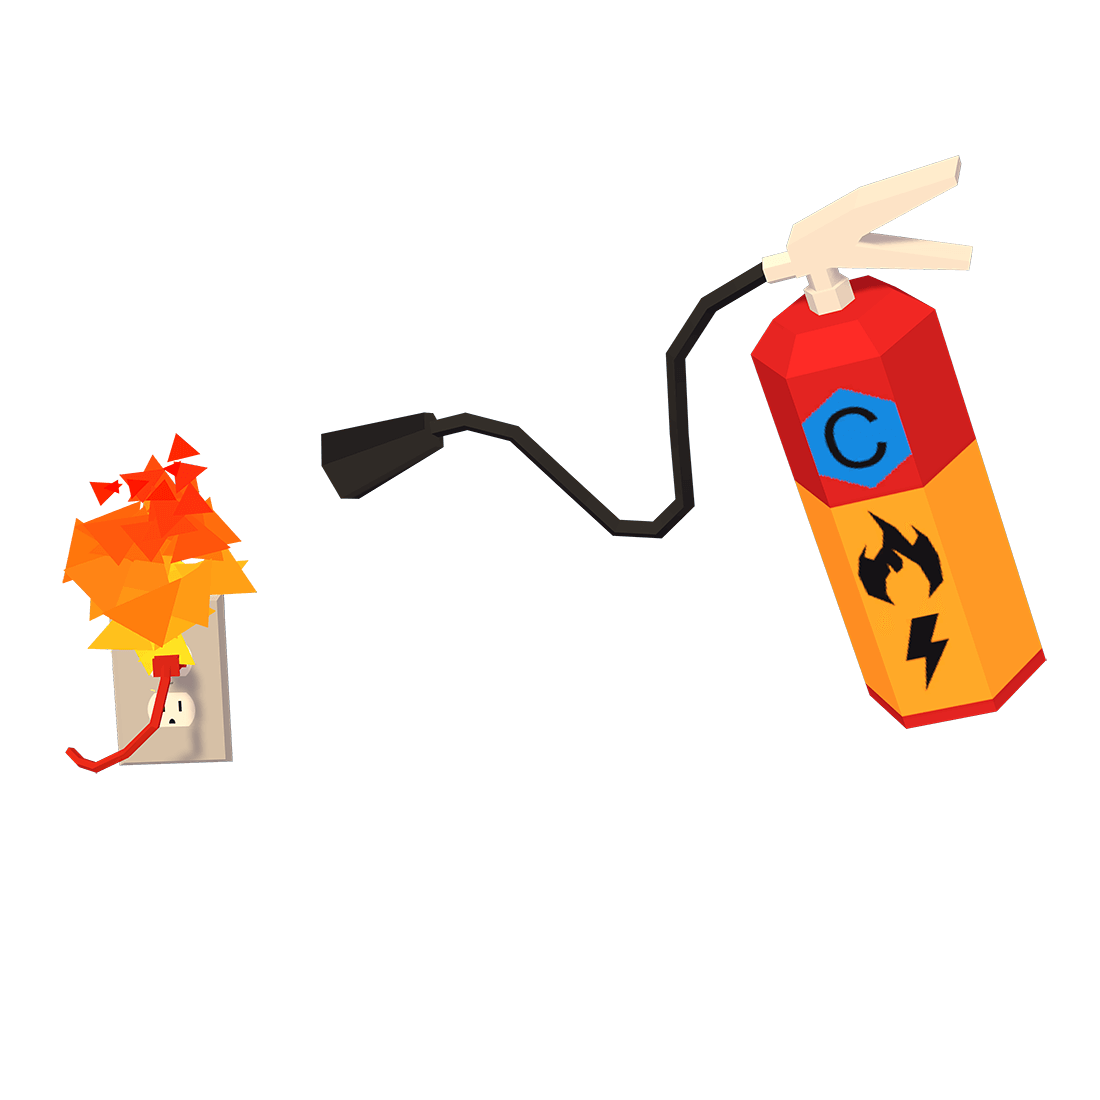 Class C fire extinguisher